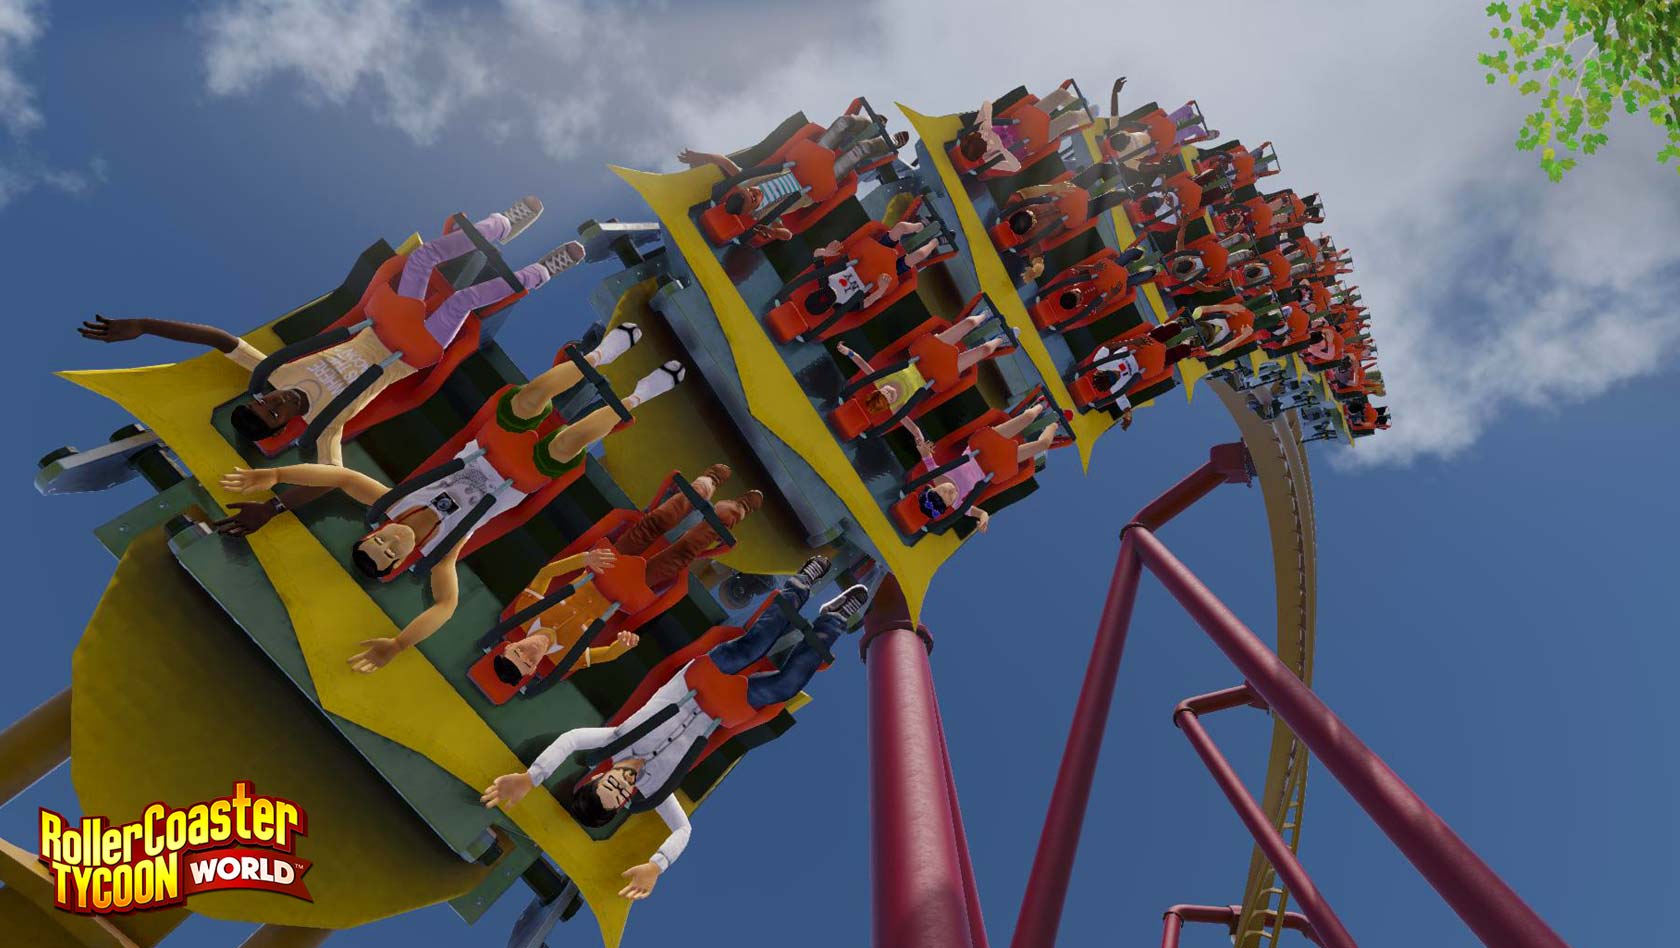 RollerCoaster Tycoon World - Flying Coaster